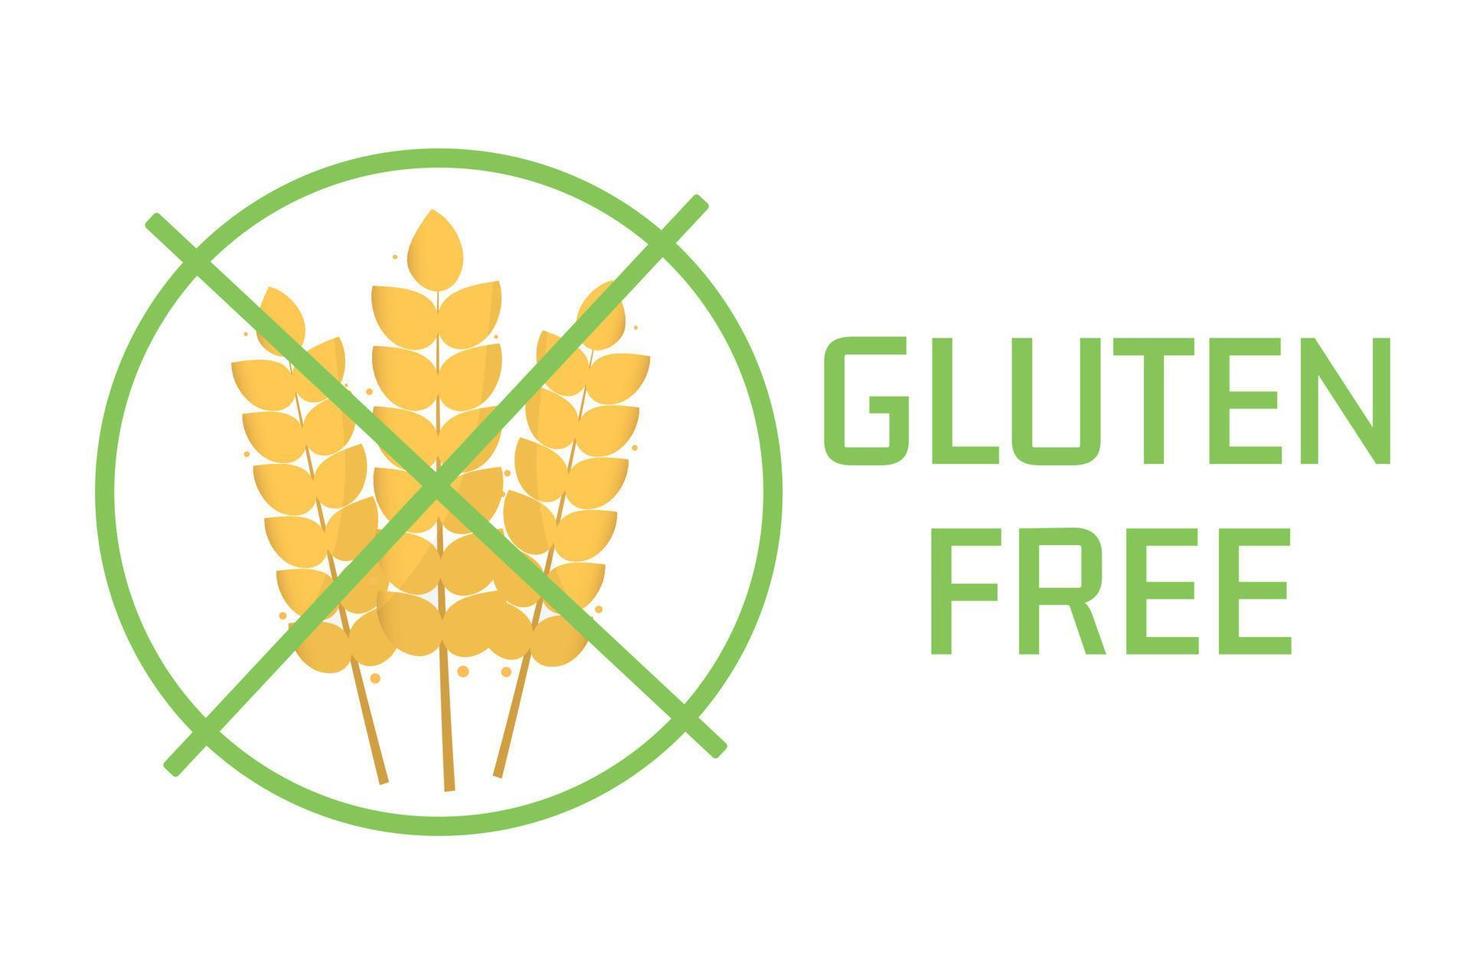 icono sin gluten con símbolo de grano o trigo. etiqueta o logotipo de alergia alimentaria. ilustración vectorial vector